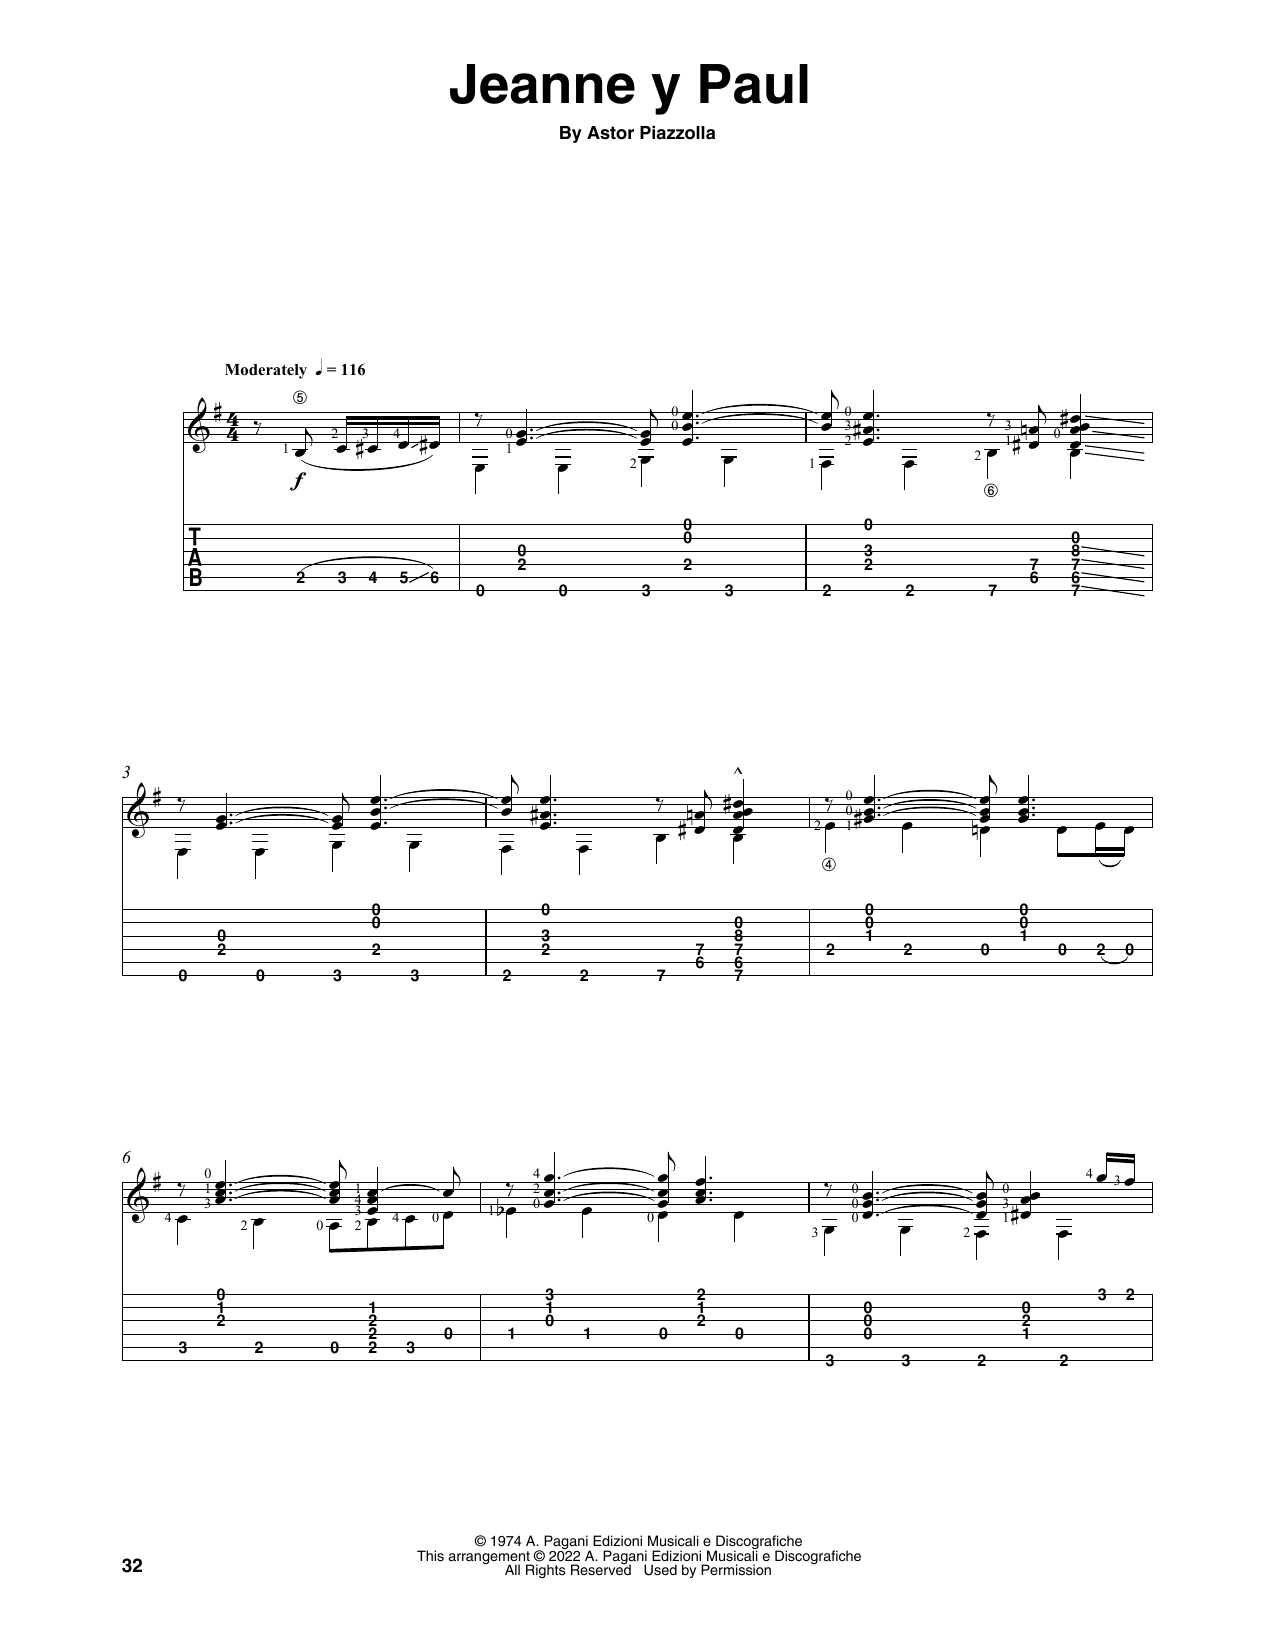 Astor Piazzolla Jeanne Y Paul (arr. Celil Refik Kaya) Sheet Music Notes & Chords for Solo Guitar - Download or Print PDF